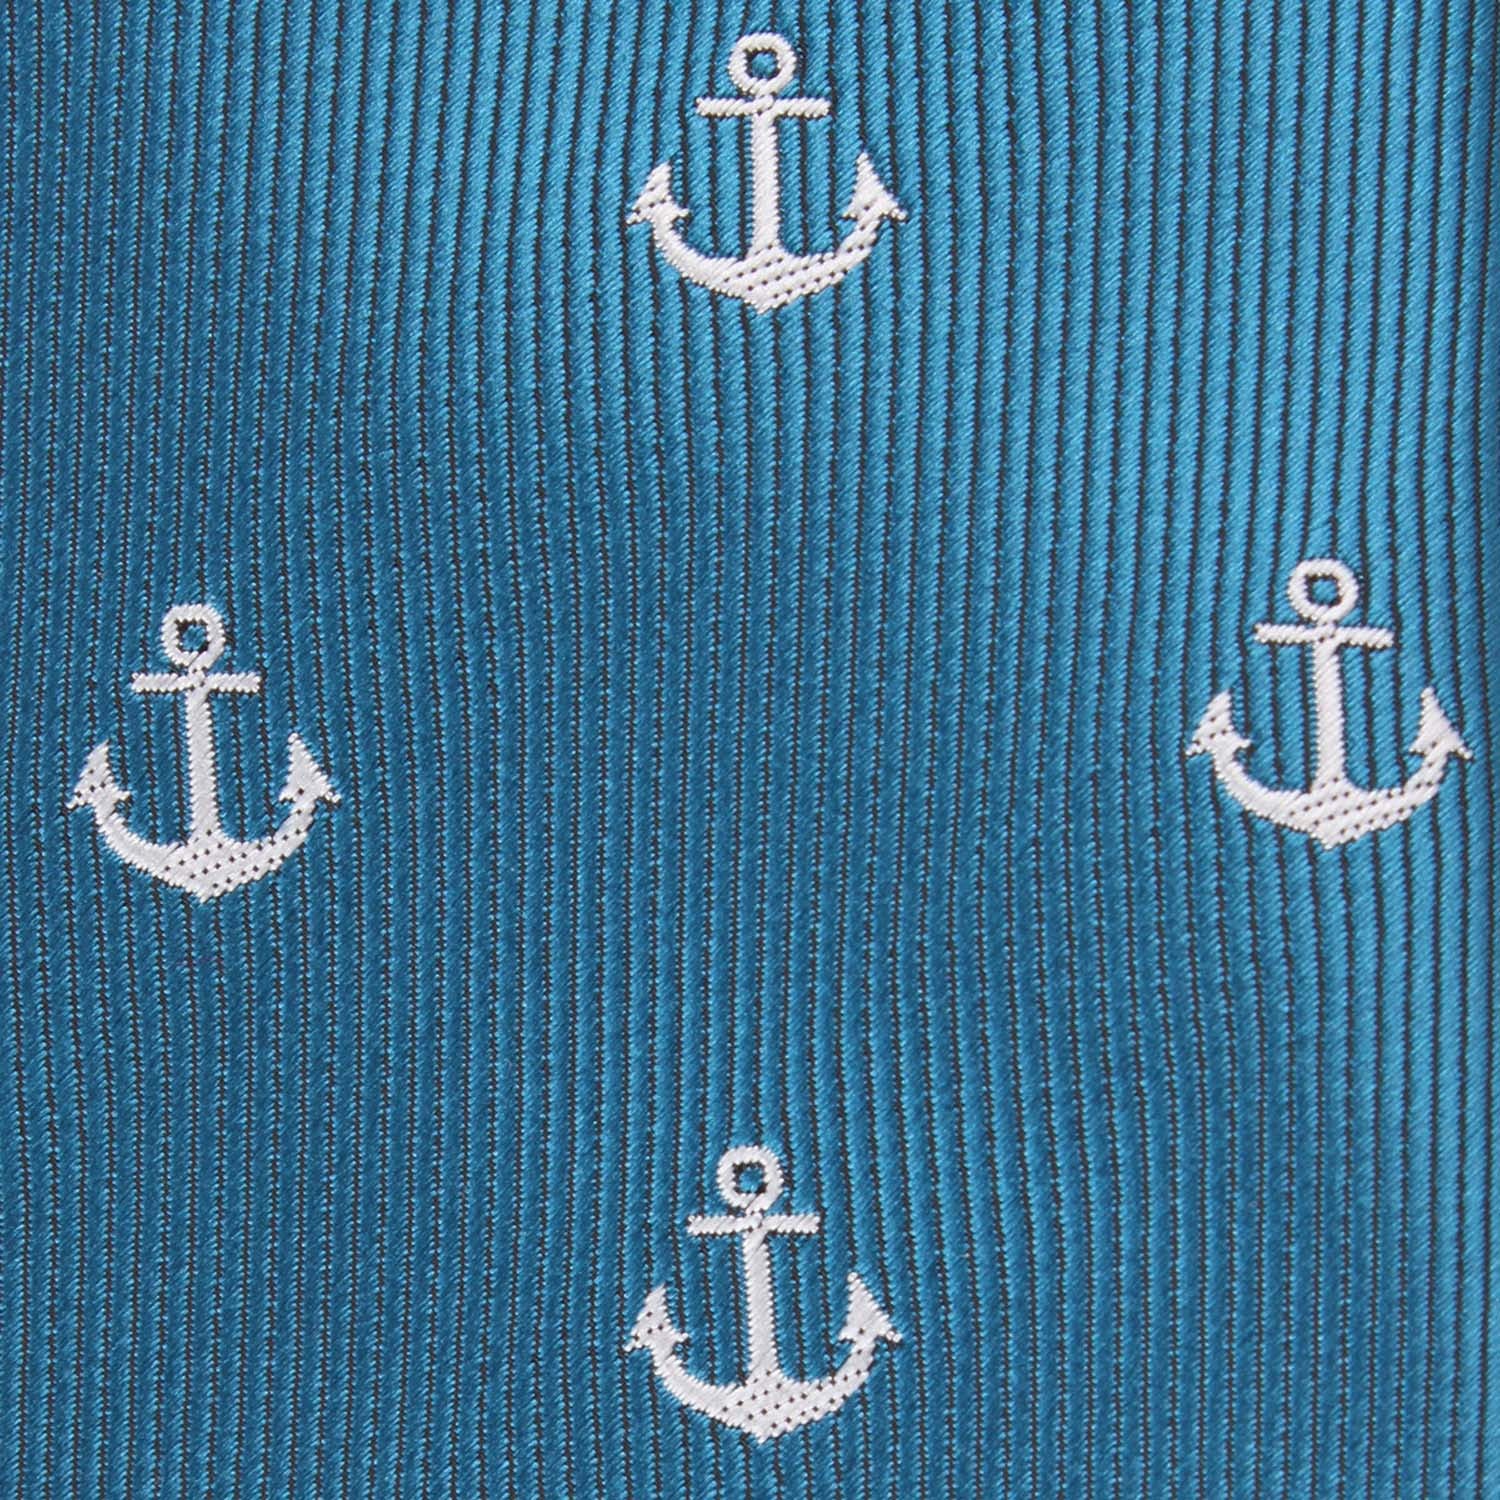 The OTAA Teal Blue Anchor Fabric Self Tie Bow Tie M102